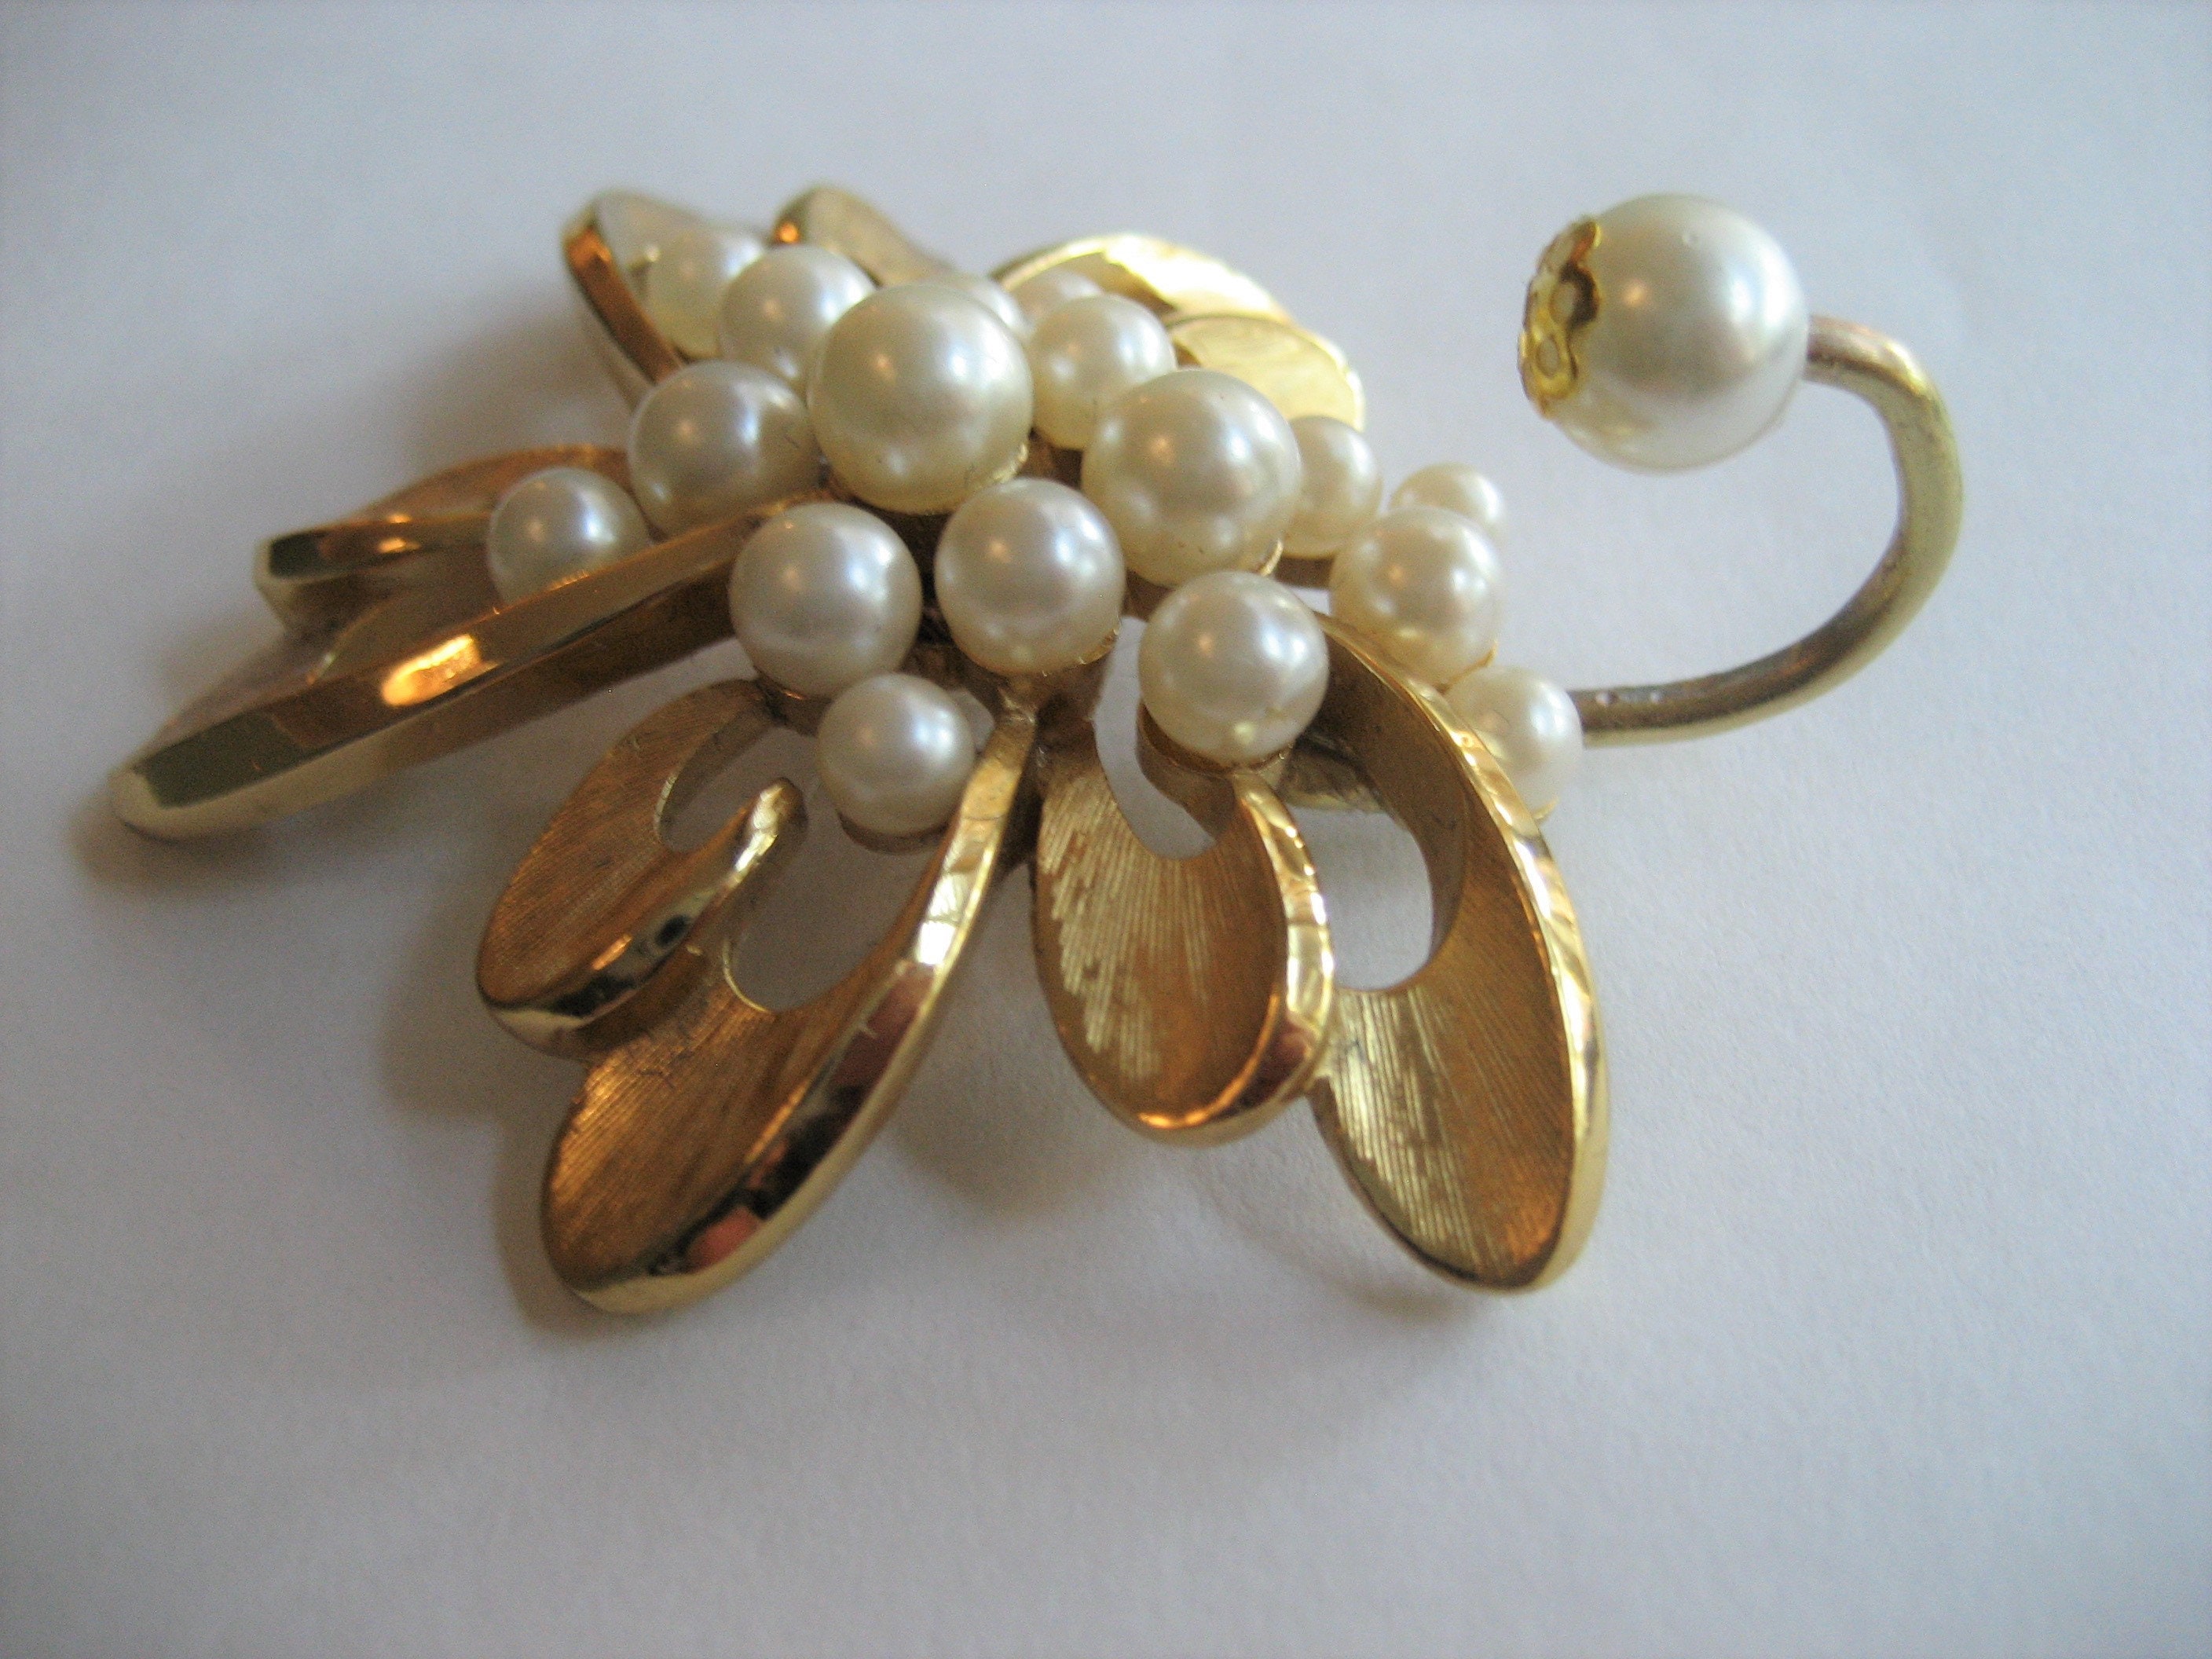 Magnetic Portuguese Knitting Pin Vintage Trifari Pearls Gold - Etsy.de